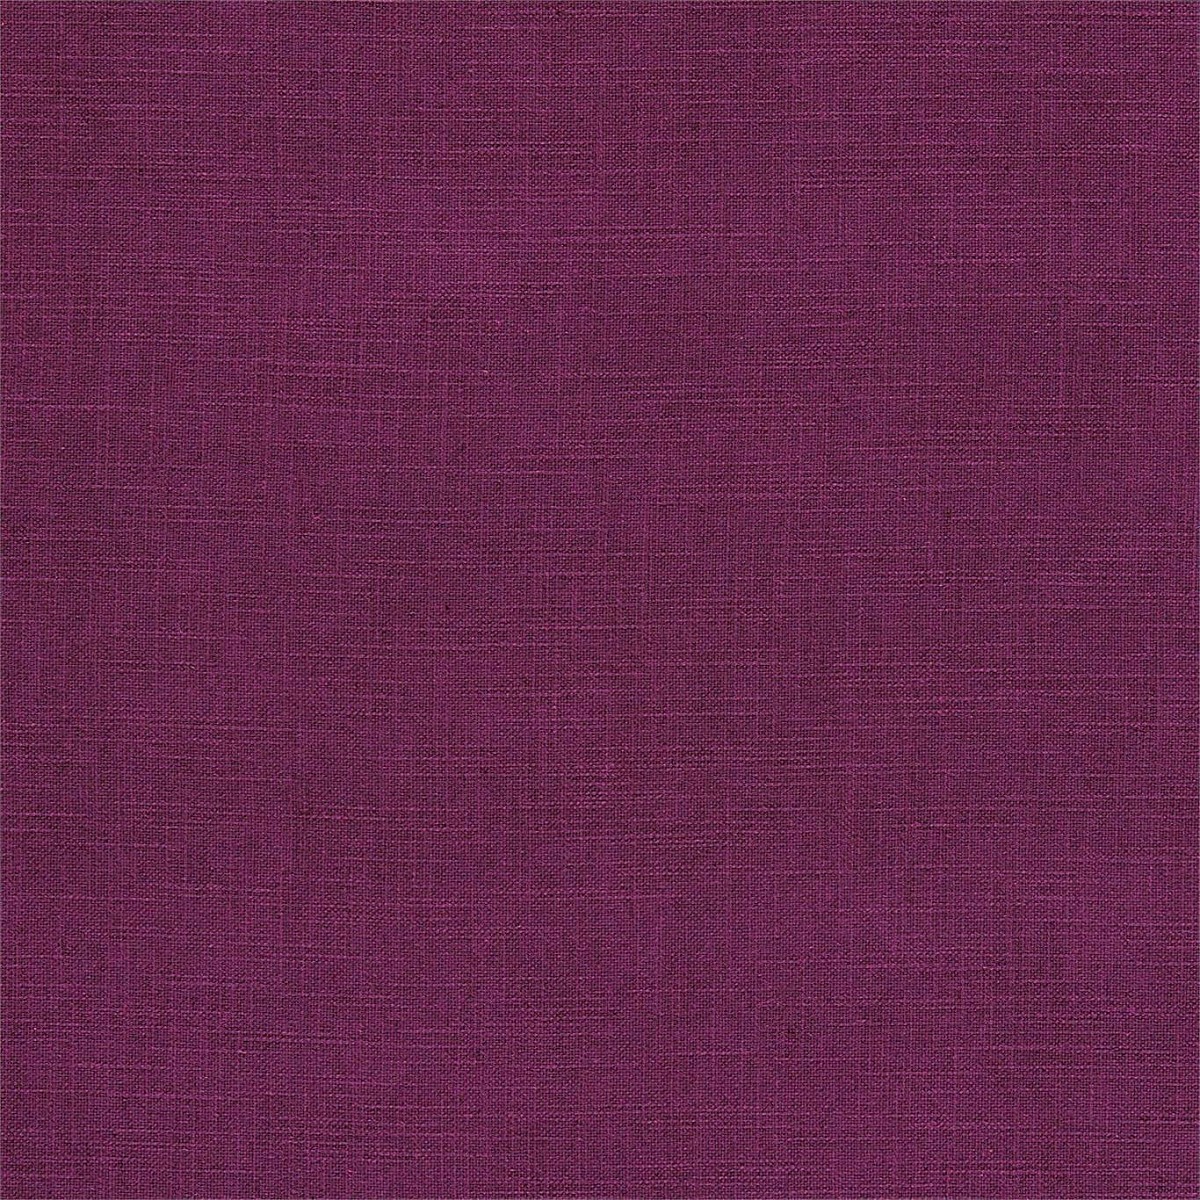 Tuscany Ii Grape Fabric by Sanderson